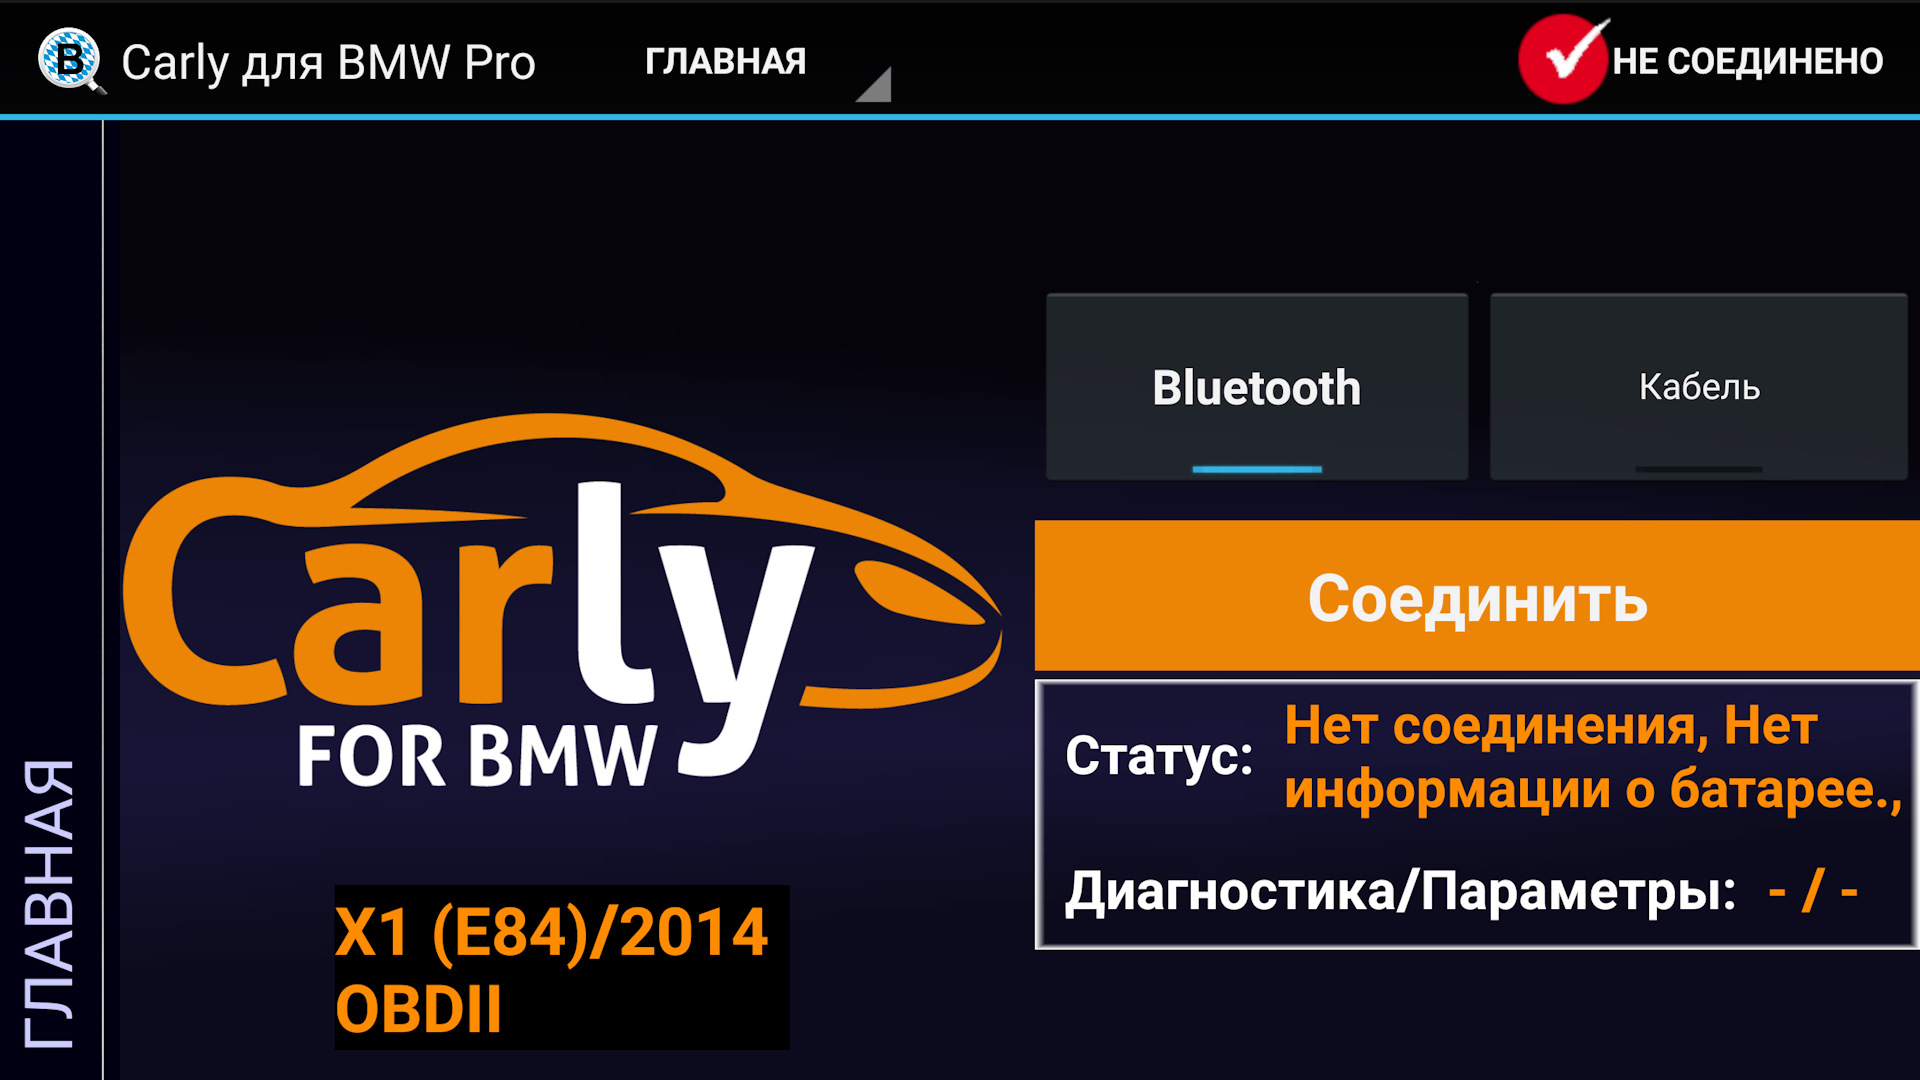 Carly for BMW 4pda. BMW Diagnostic.